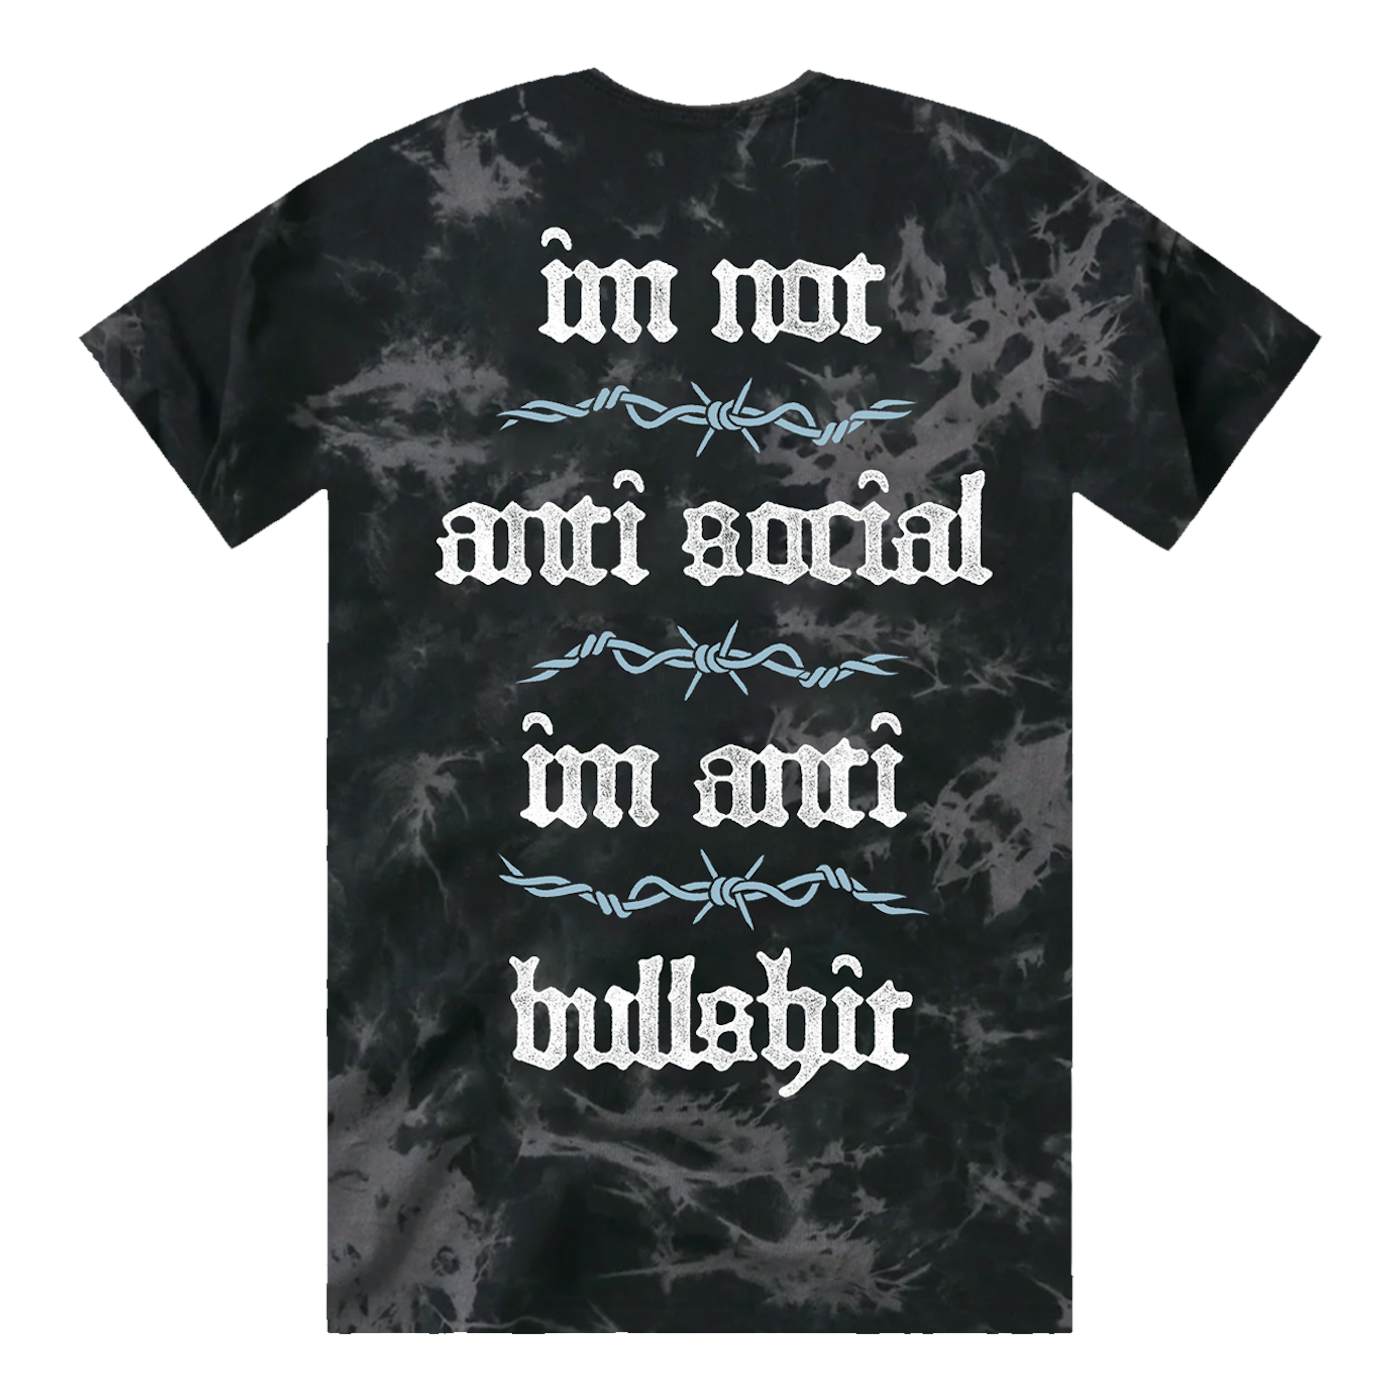 While She Sleeps "Anti Social Spider" T-Shirt